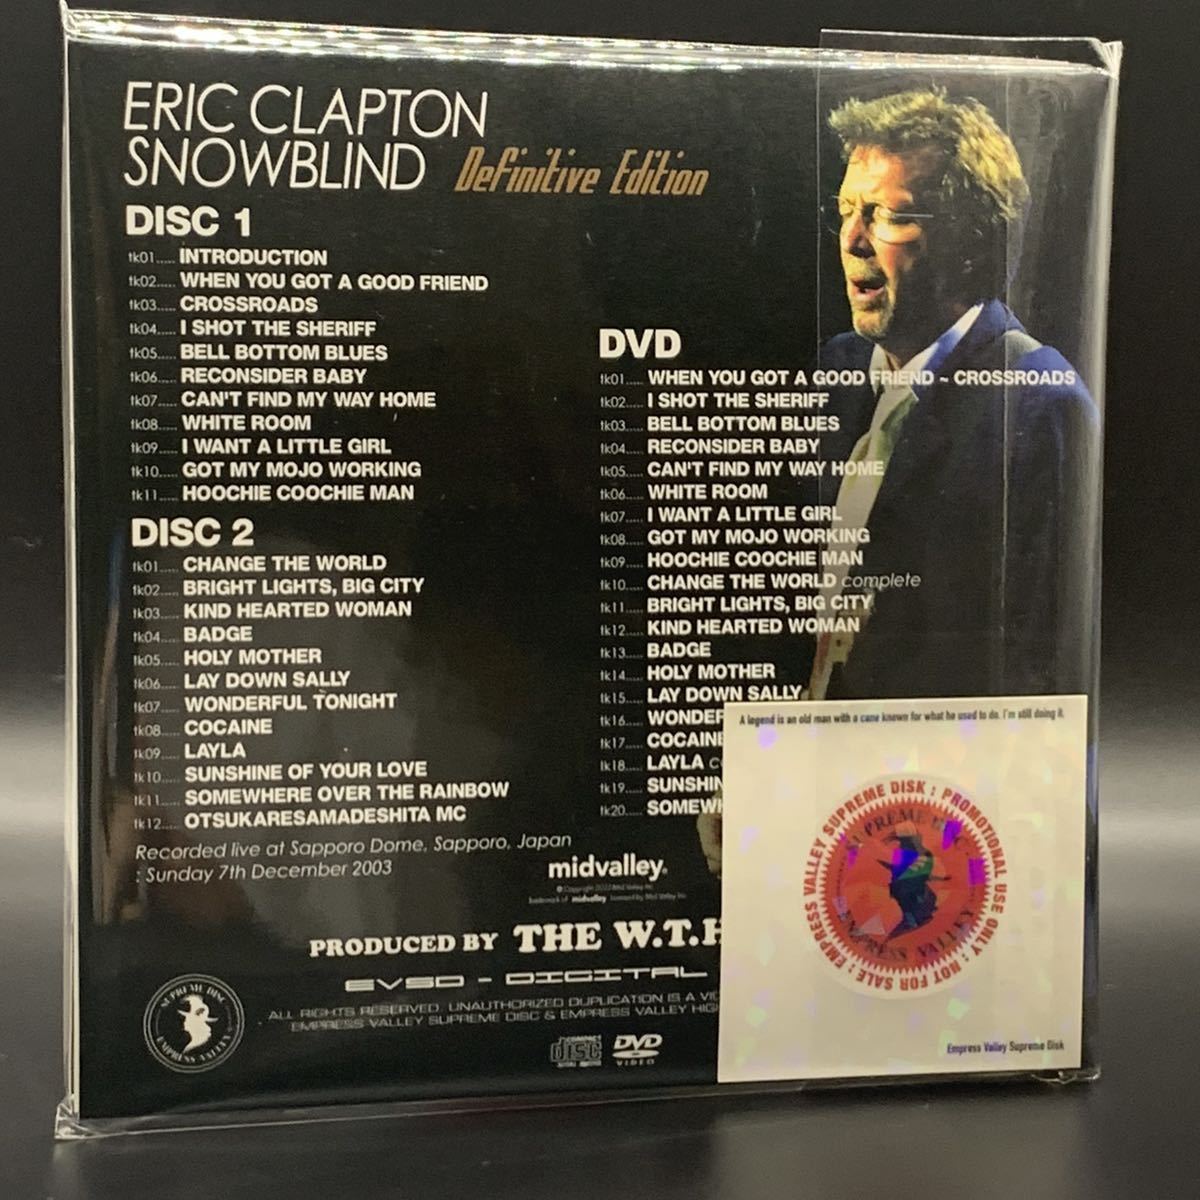 Eric Clapton / Snow Blind Definitive Edition (2CD+1DVD) – Music 